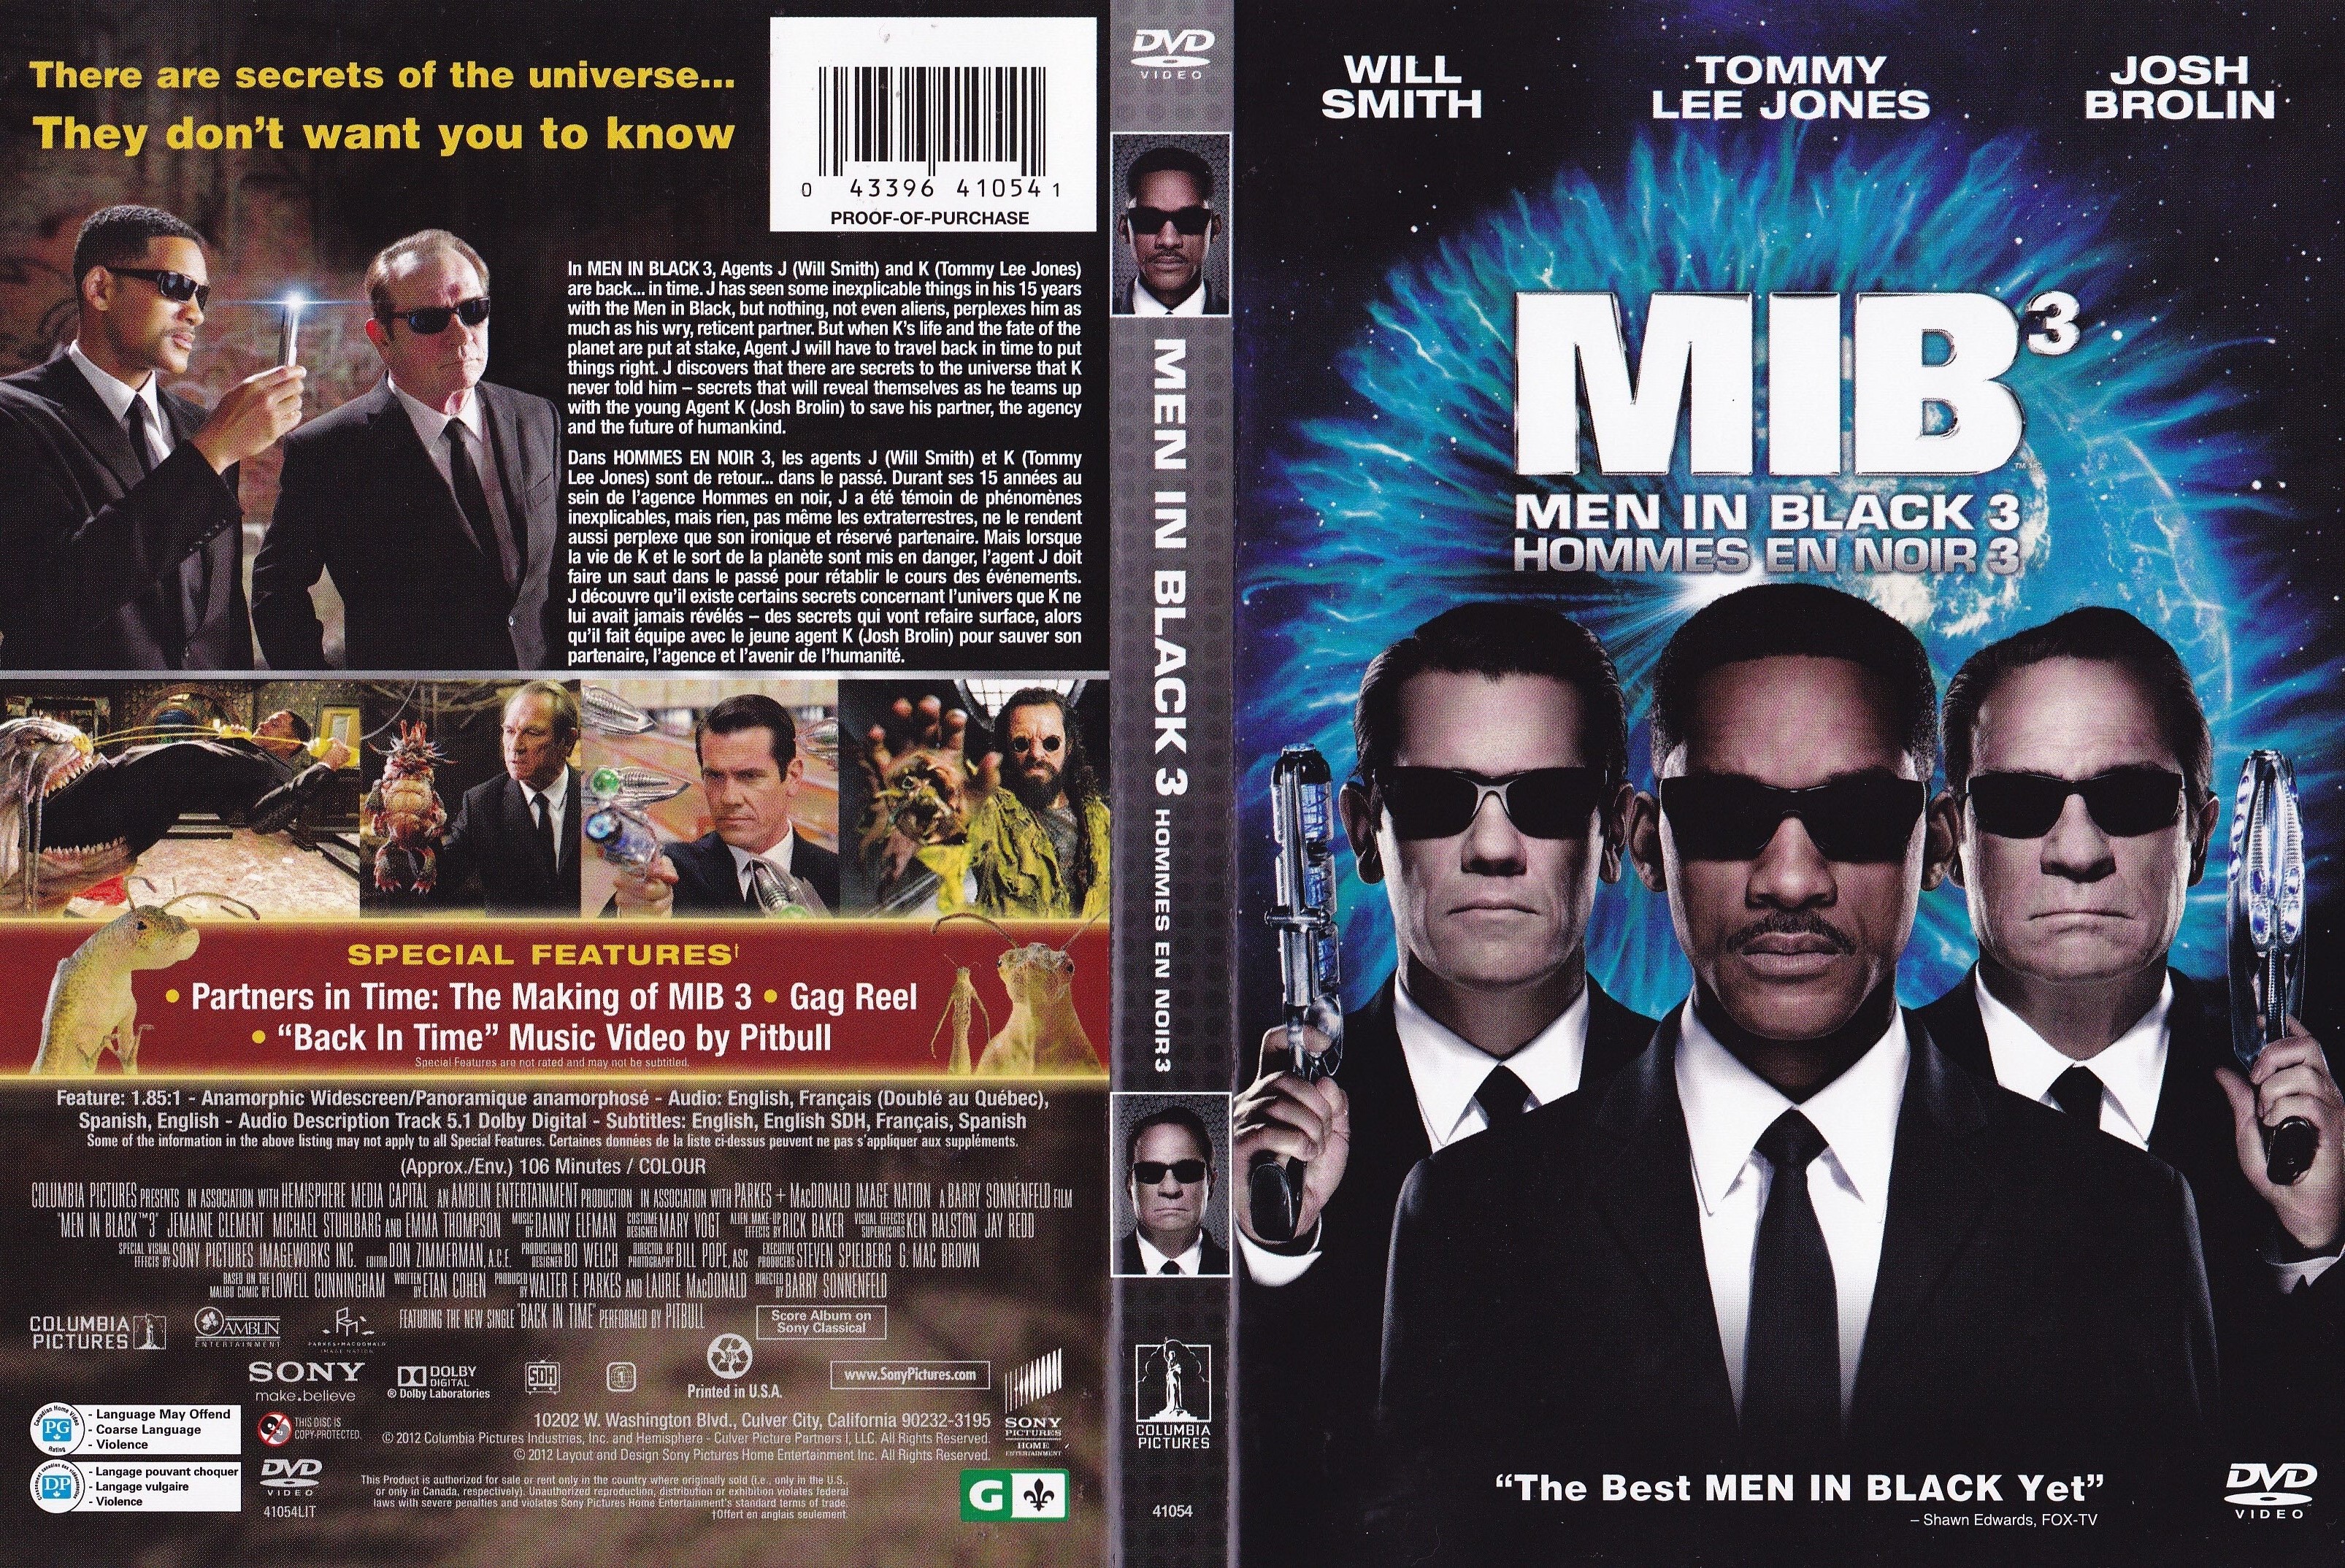 Jaquette DVD Hommes en noir 3 - Men in black 3 (Canadienne)